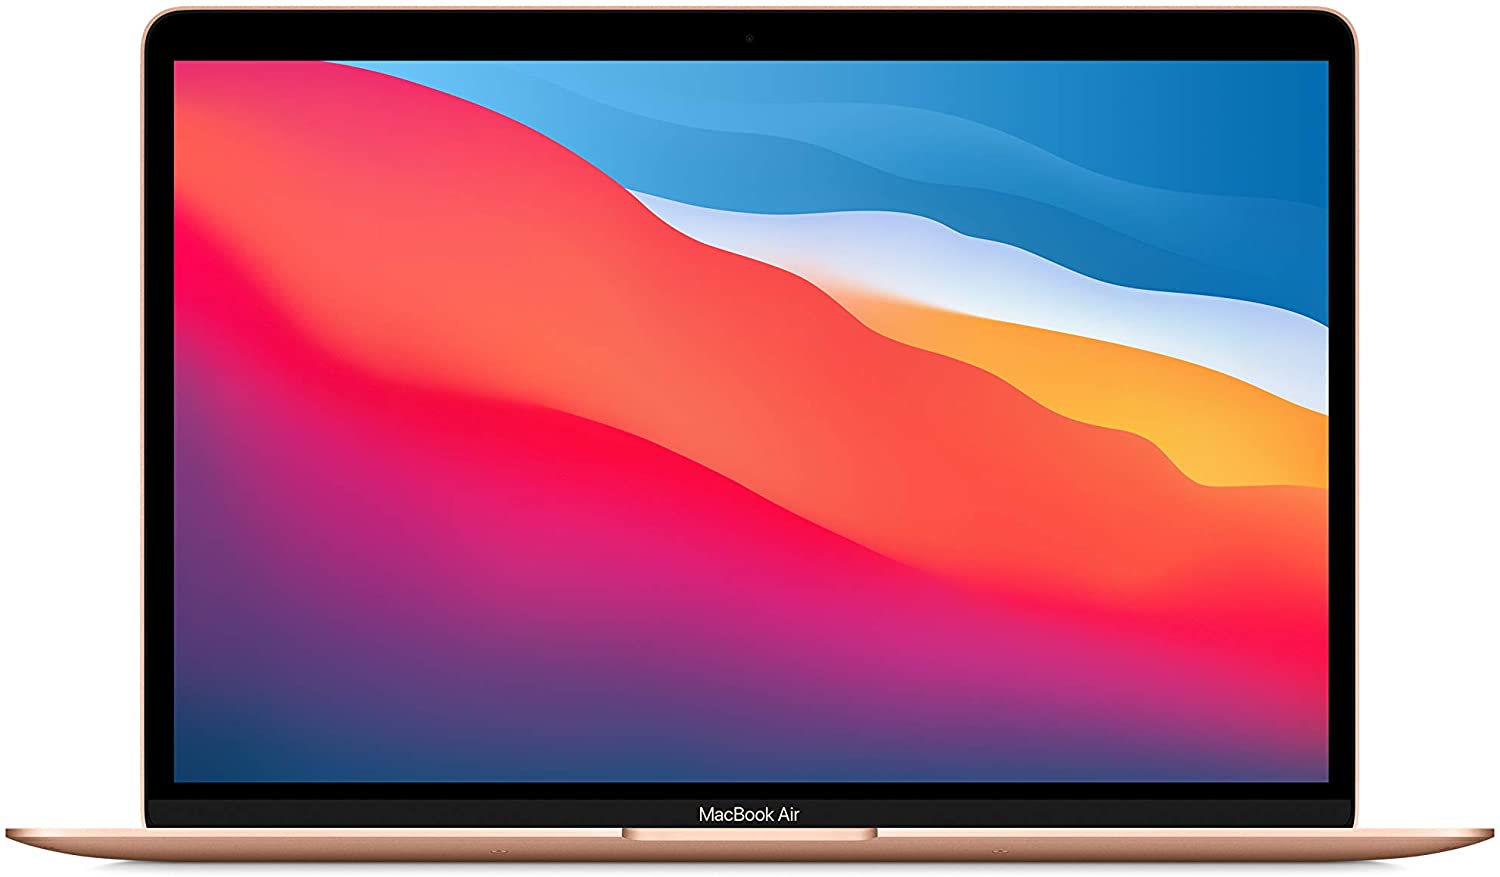 2020 Apple MacBook Air Laptop: Apple M1 Chip, 13” Retina Display, 8GB RAM, 256GB SSD Storage - Gold $800